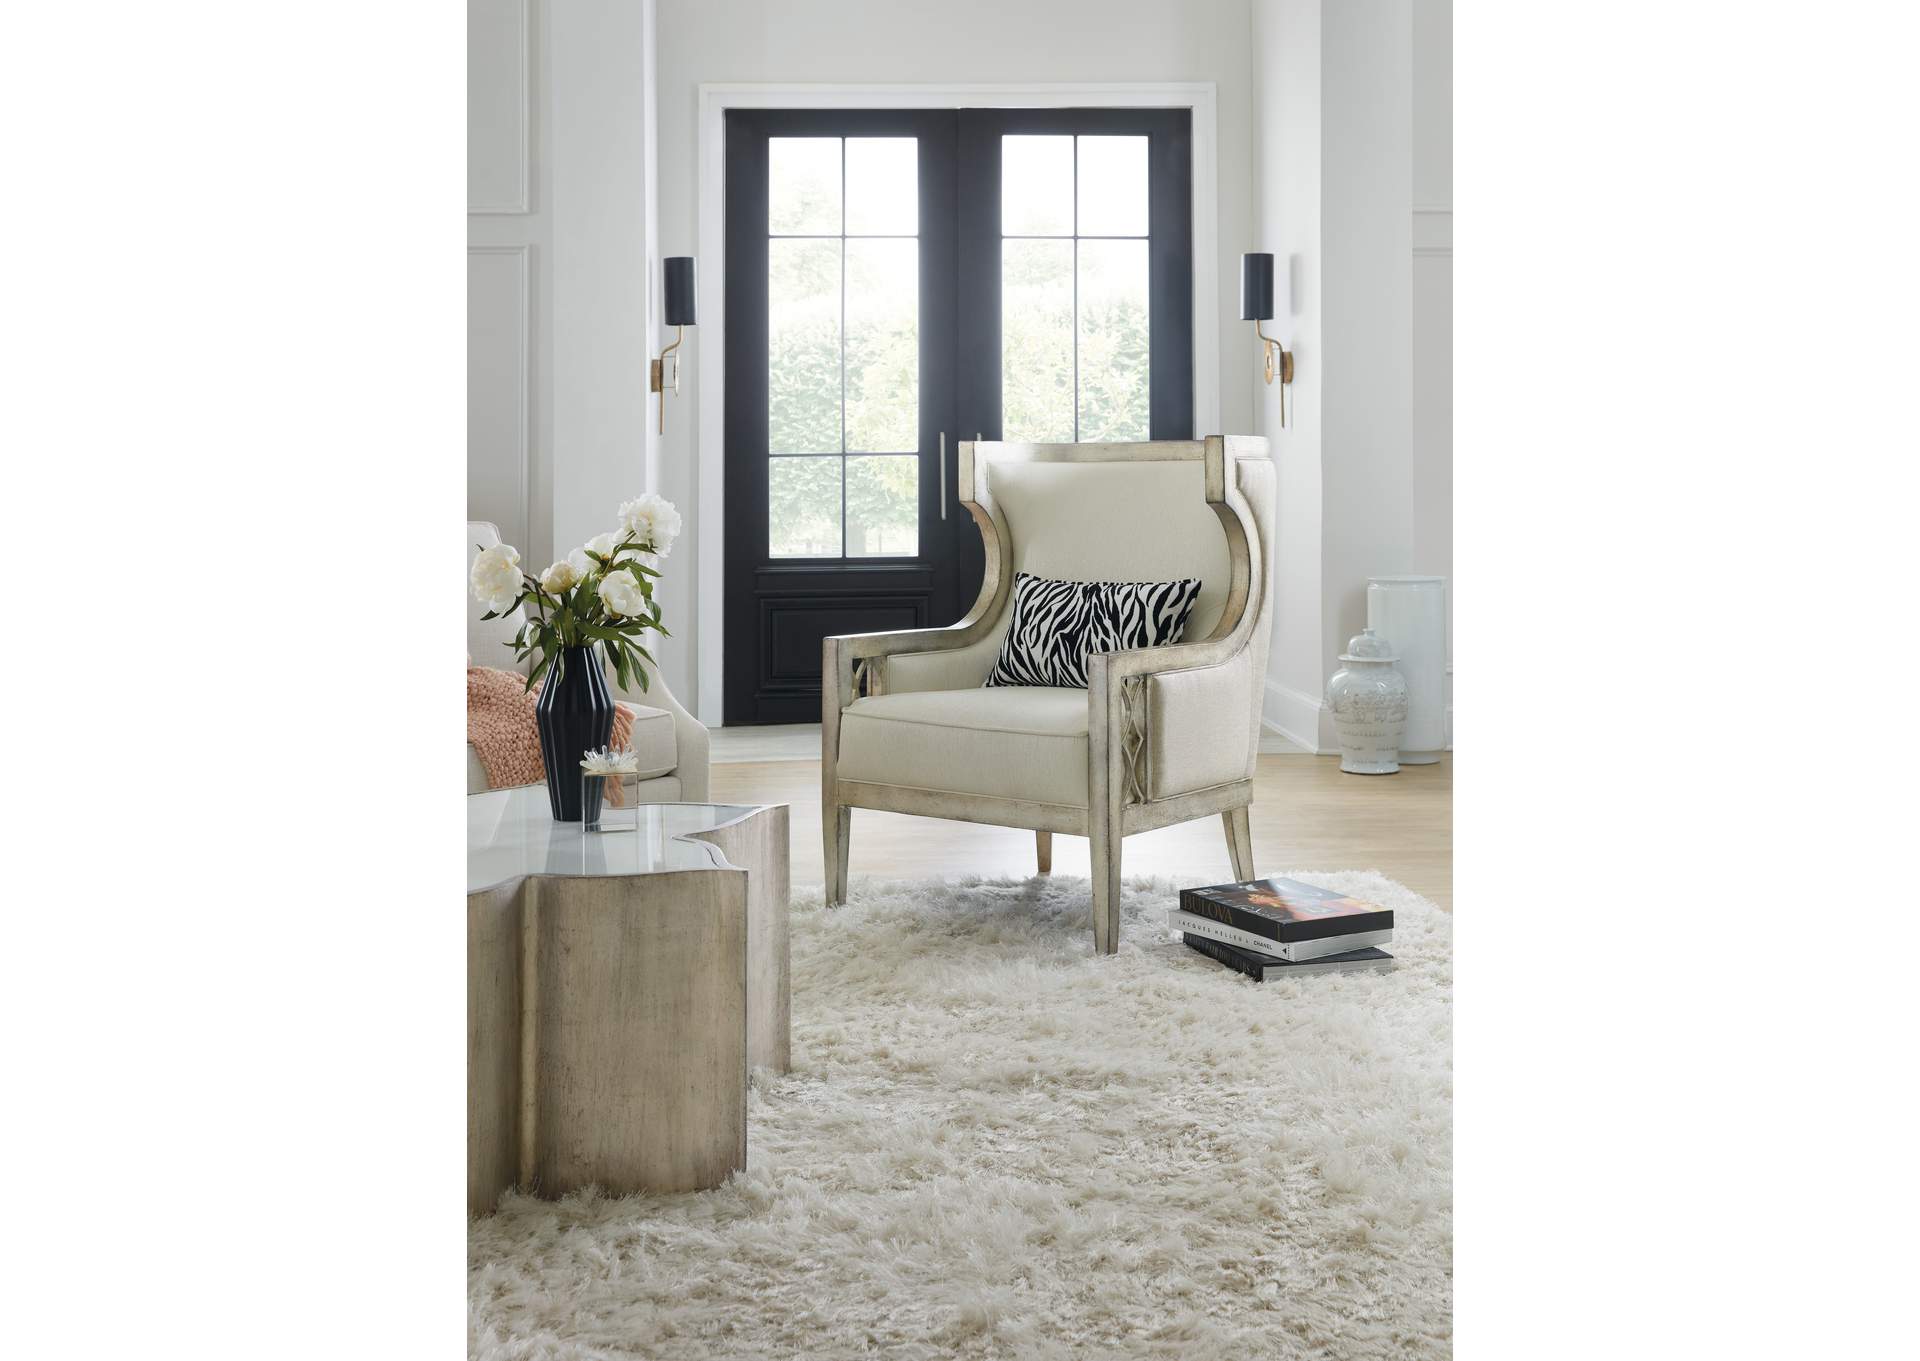 Sanctuary Debutant Wing Chair,Hooker Furniture